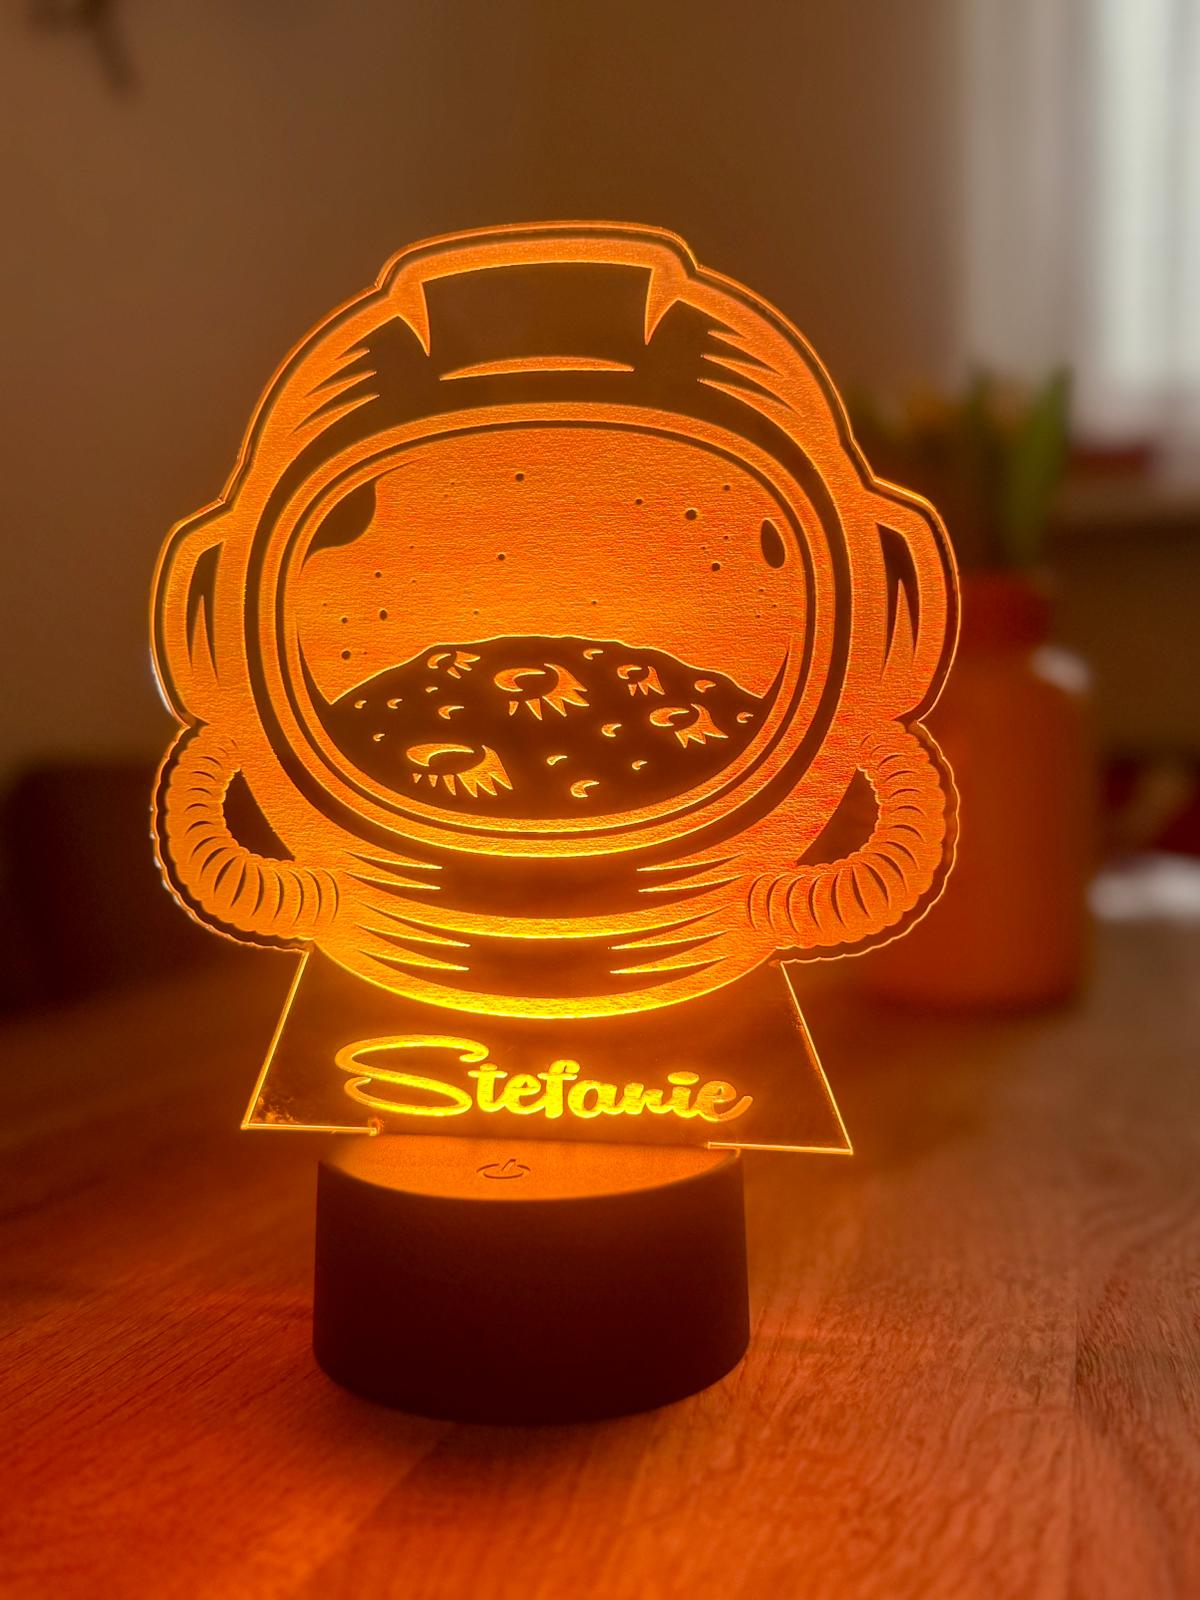 Astronautenhelm und Mondreflexion - Kinderzimmerlampe LED